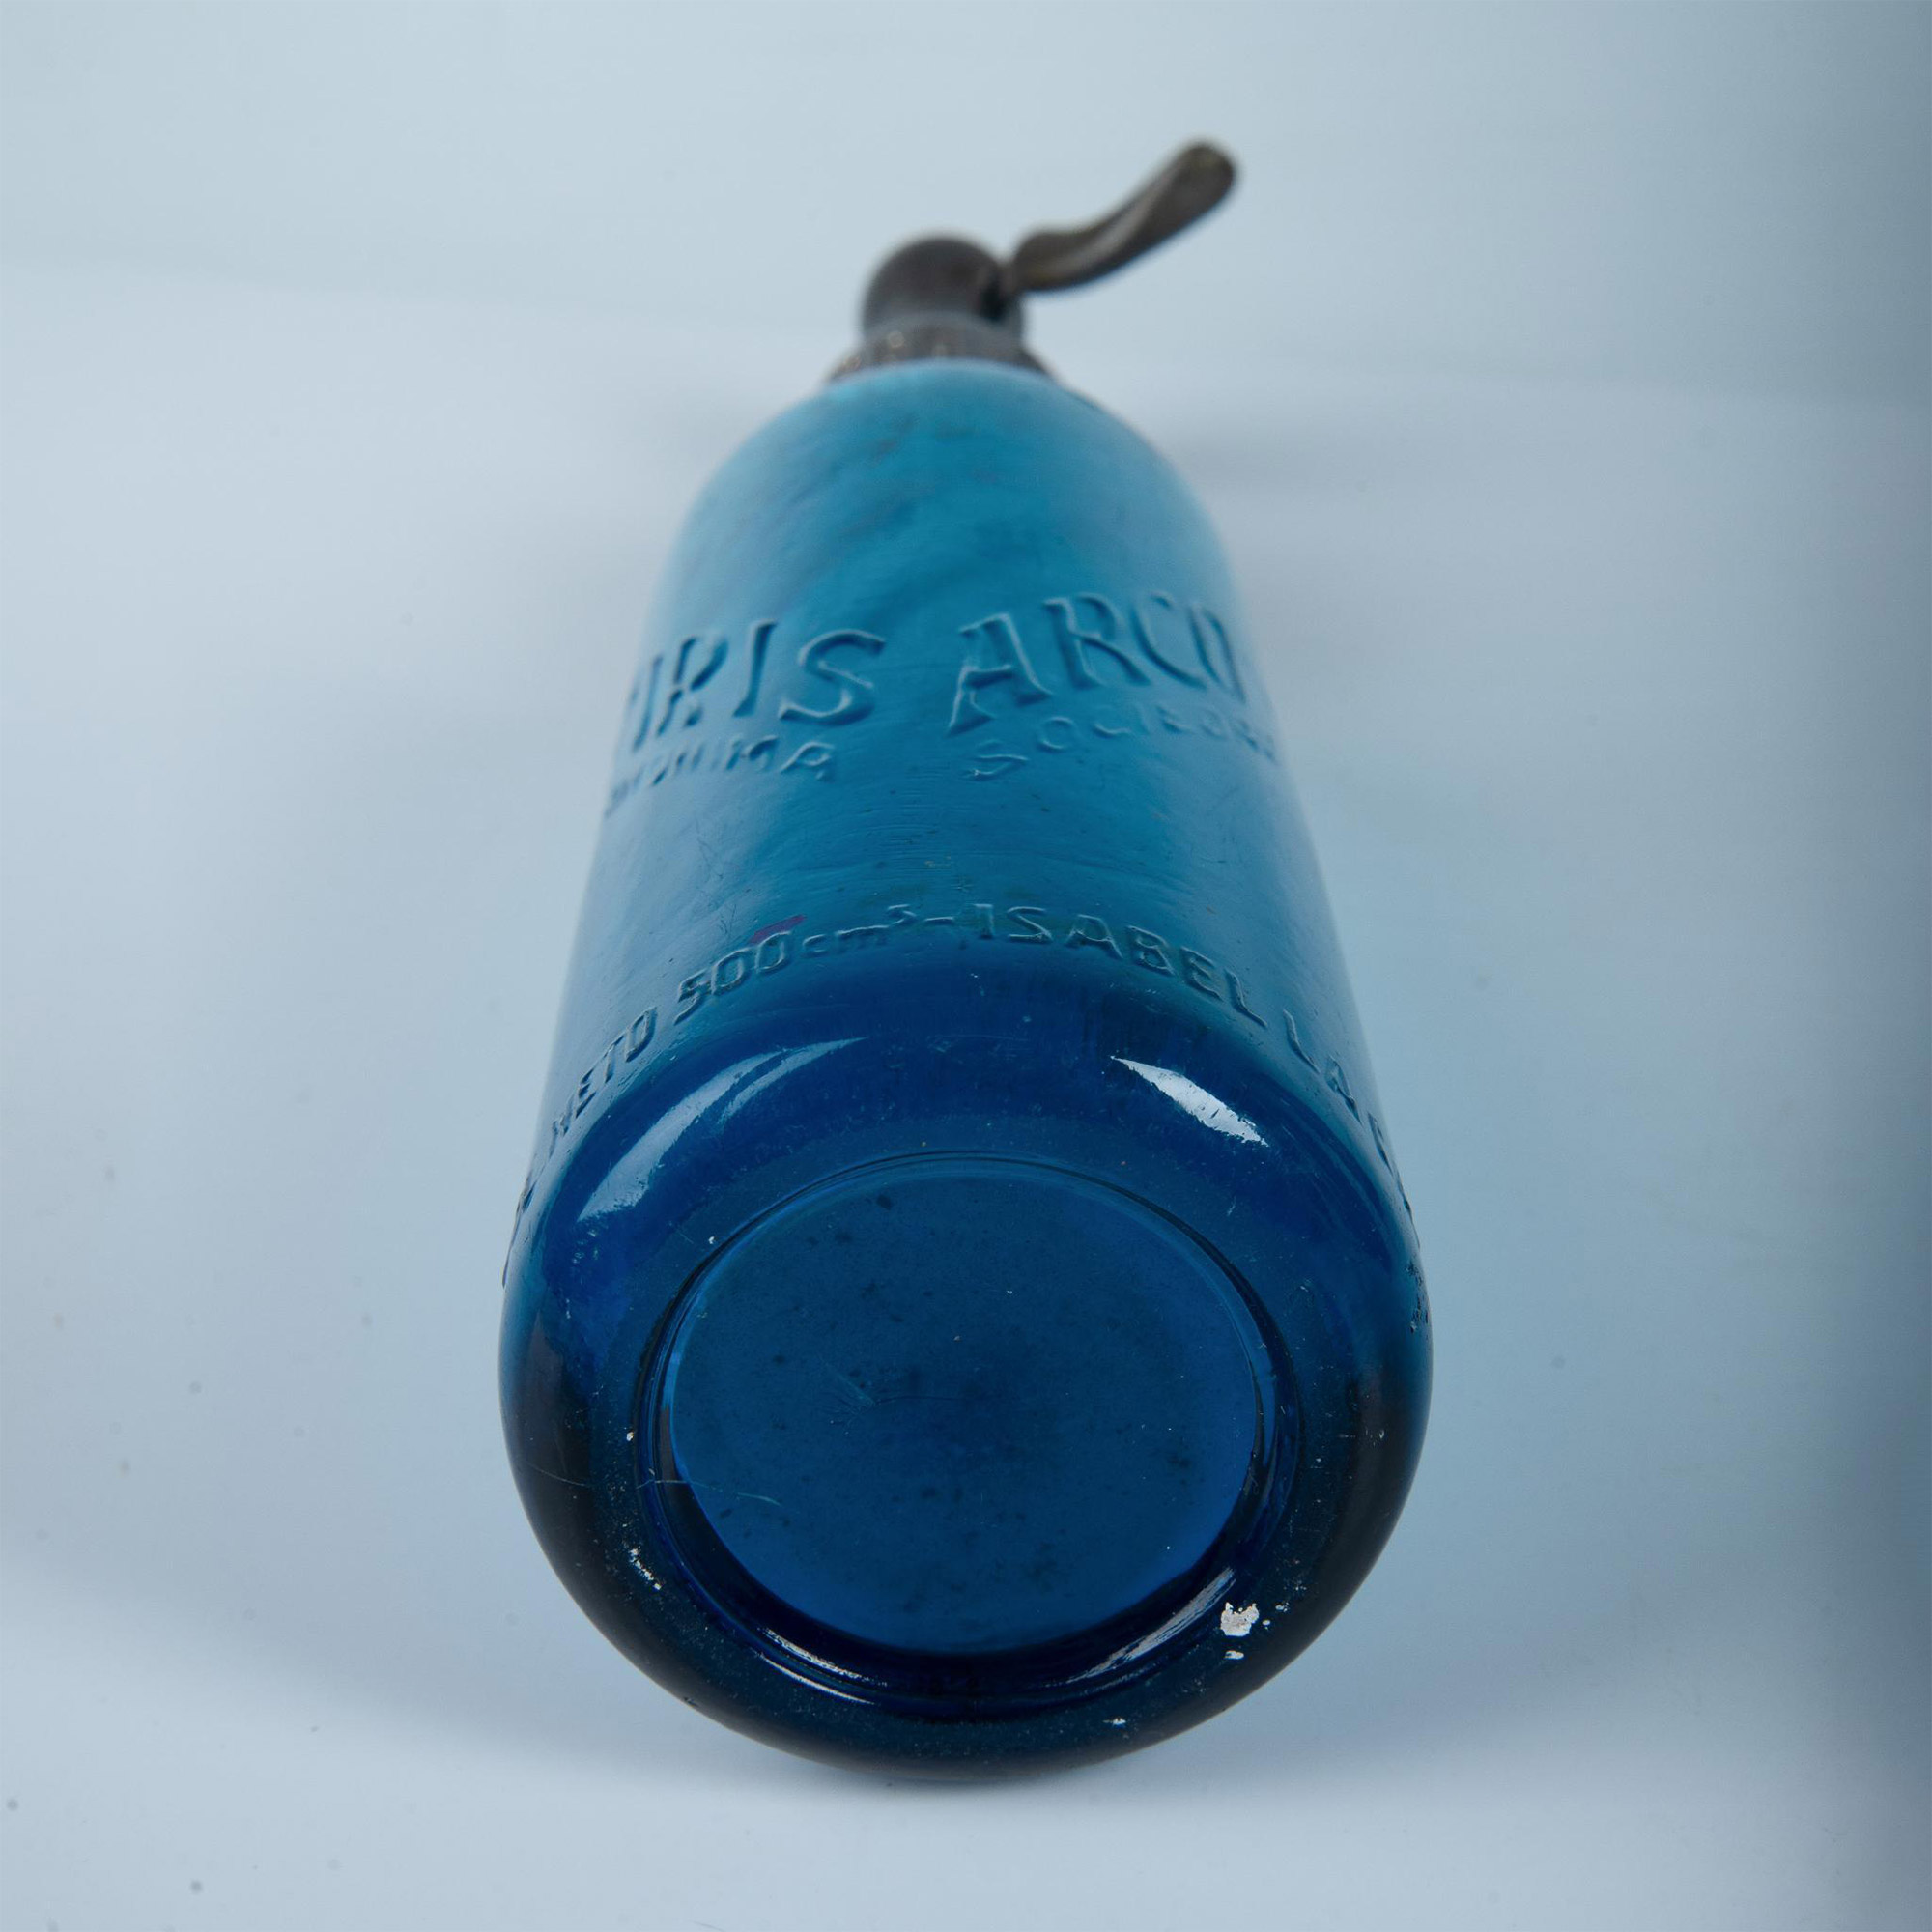 Antique Blue Glass Seltzer Bottle Argentina, Iris Arco - Image 7 of 7